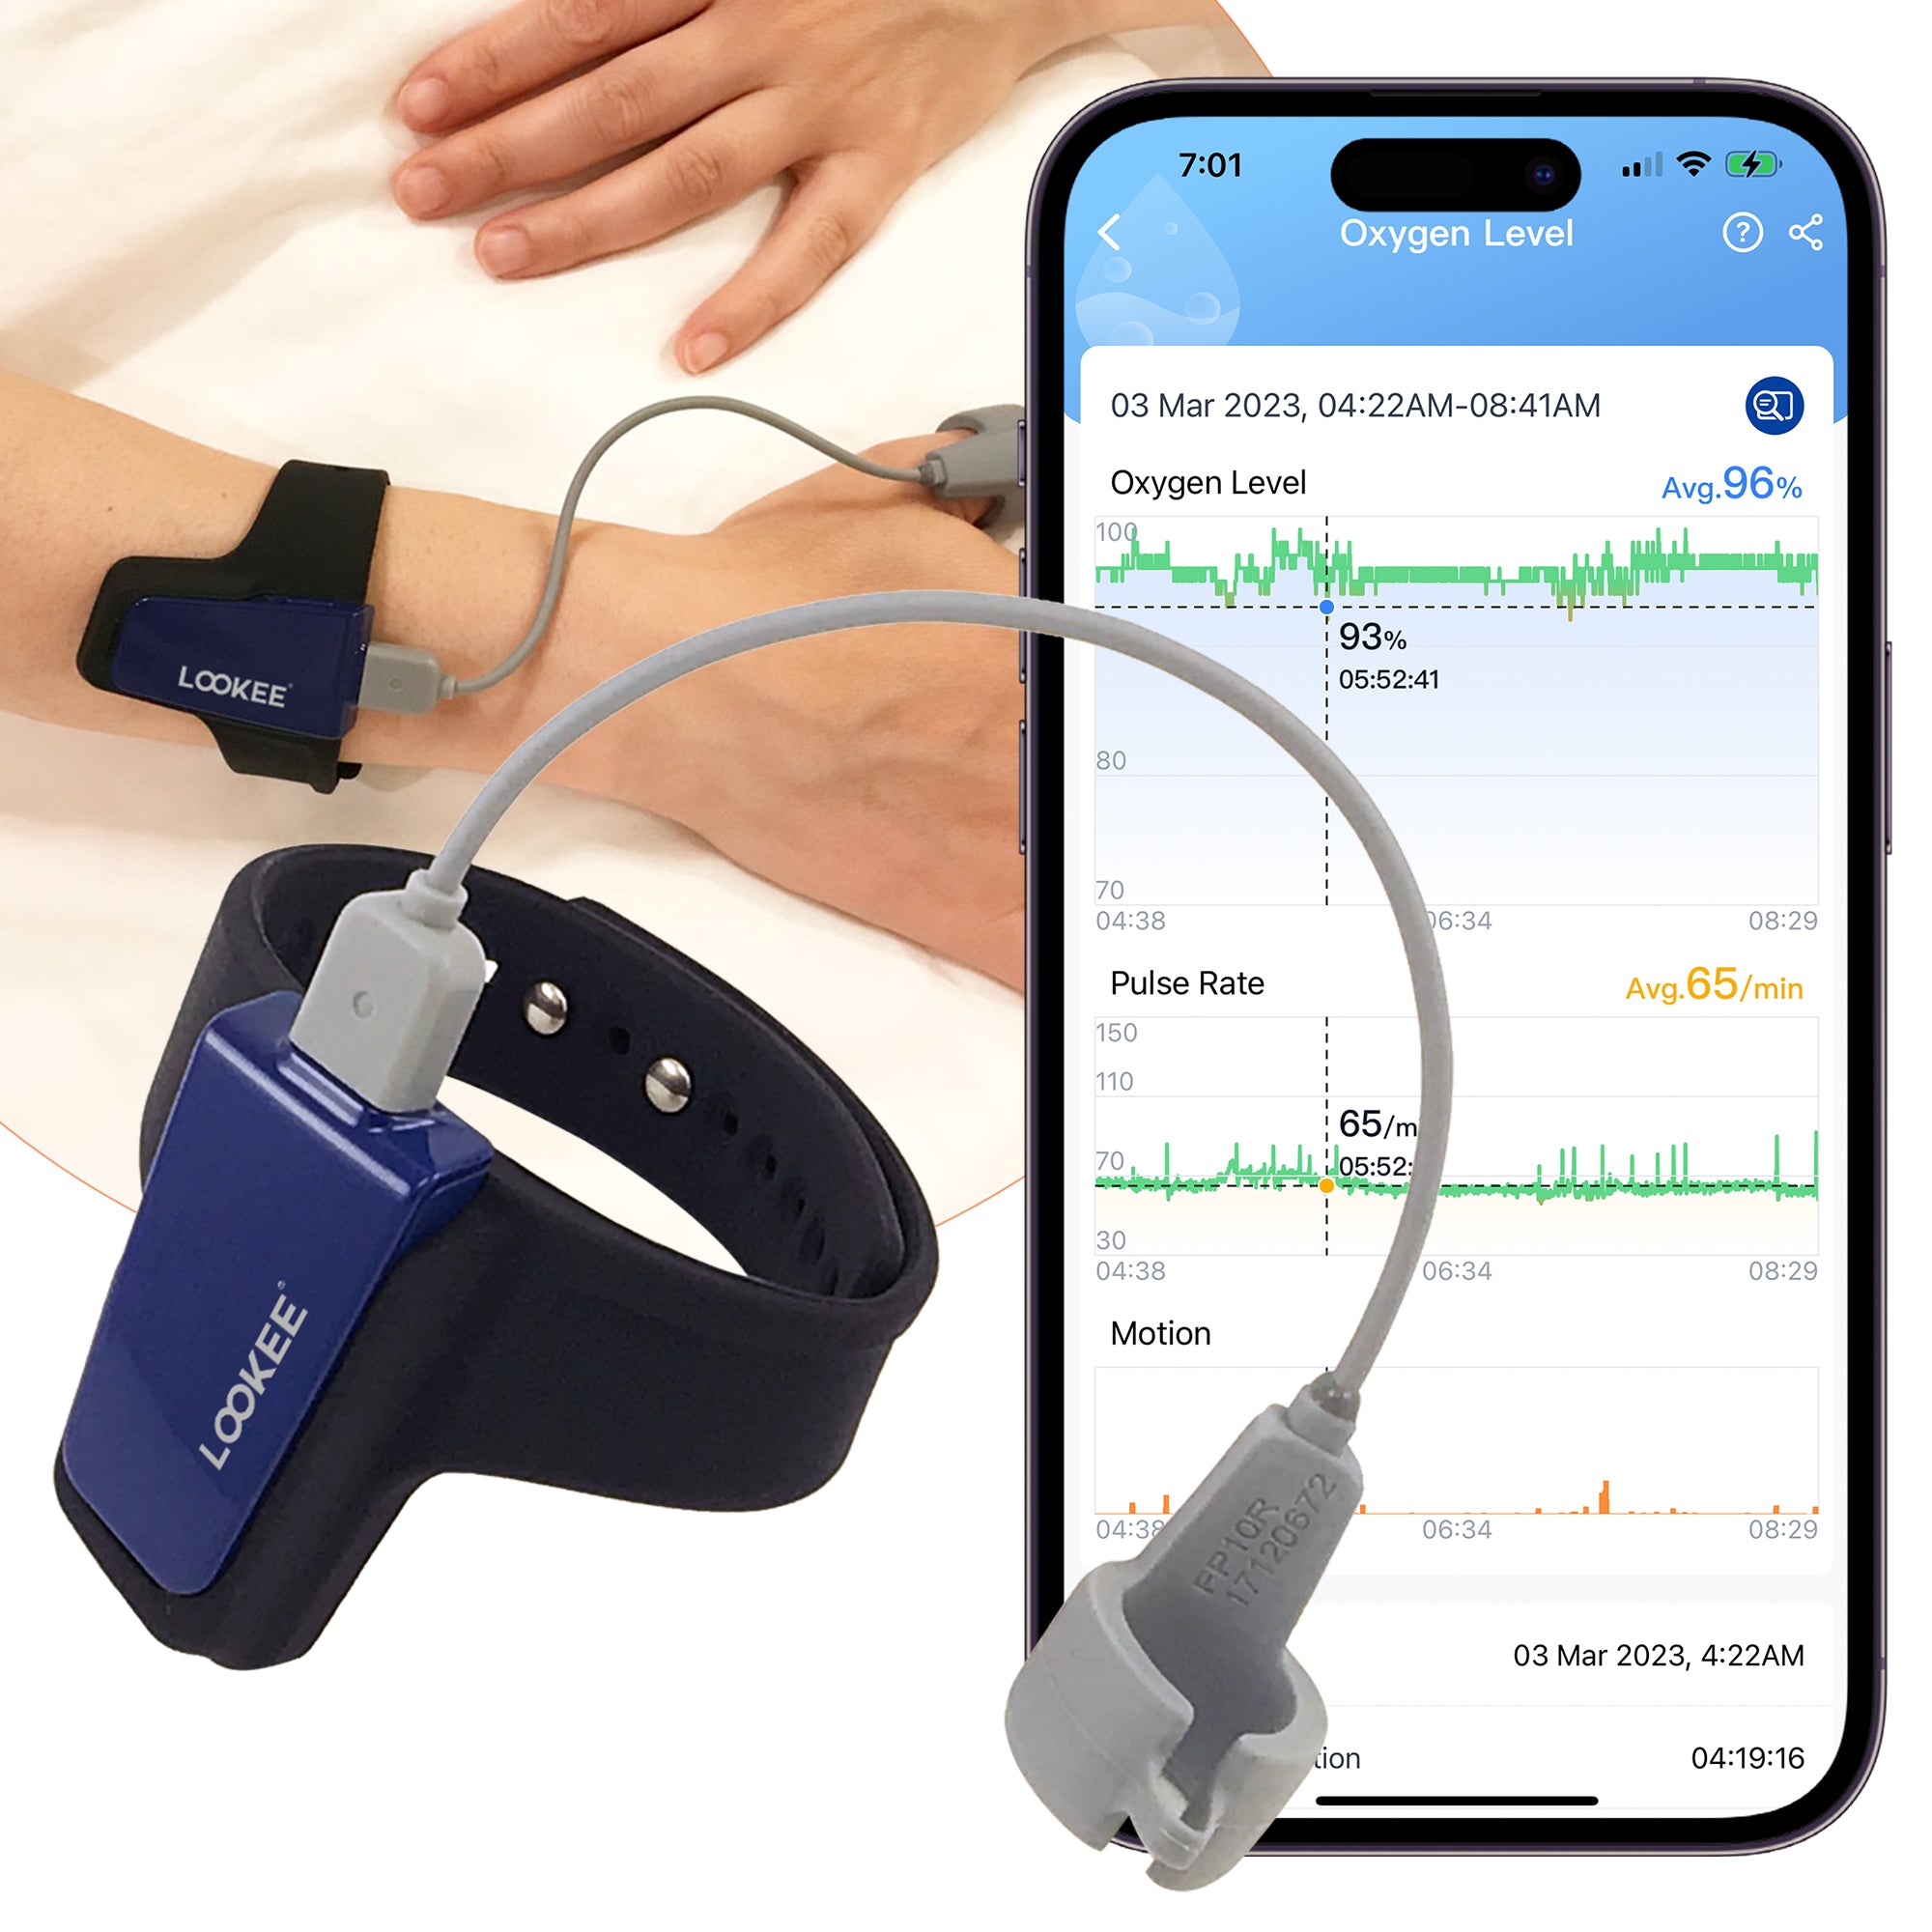  EMAY SleepO2 Pro - Wrist Pulse Oximeter with SpO2